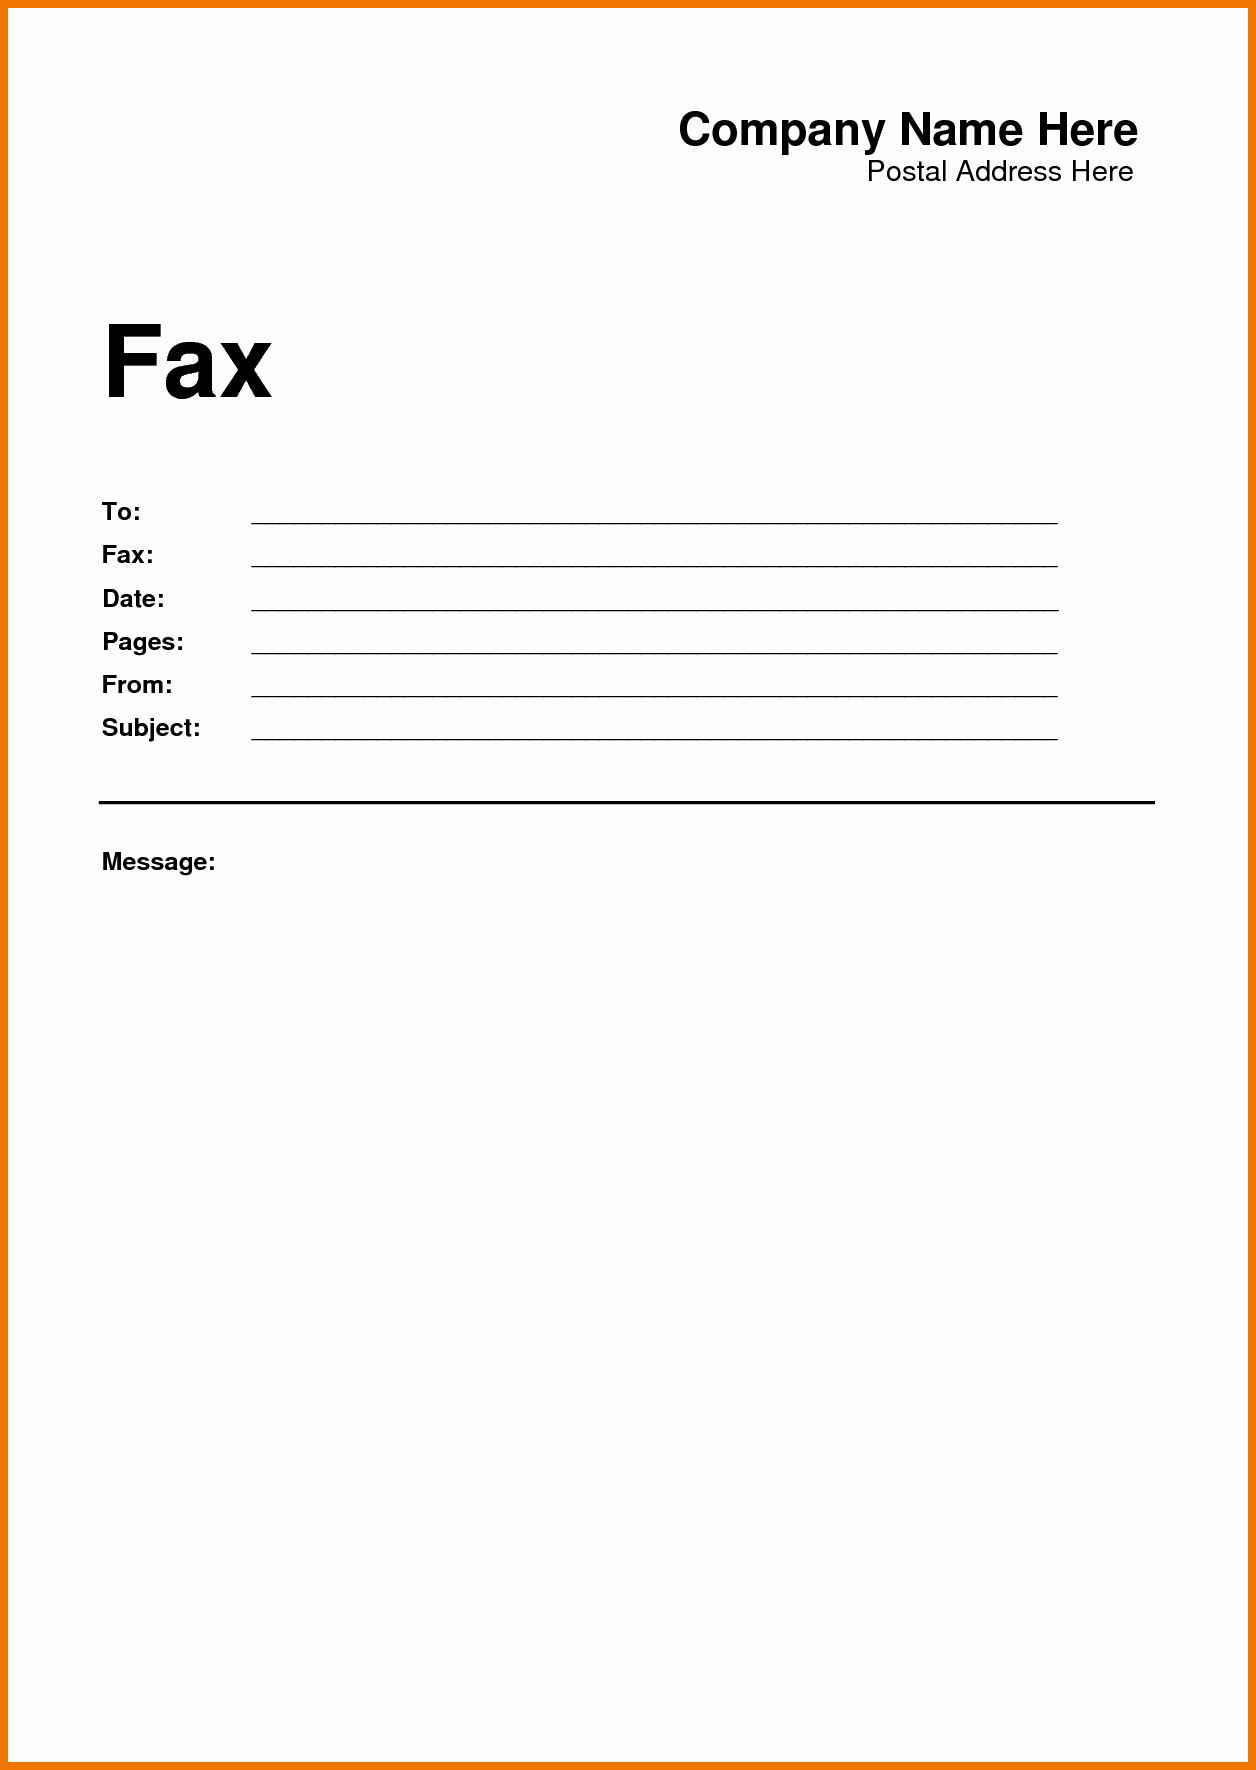 Free Fax Cover Sheets Template Fresh Microsoft Fice Fax Template Portablegasgrillweber